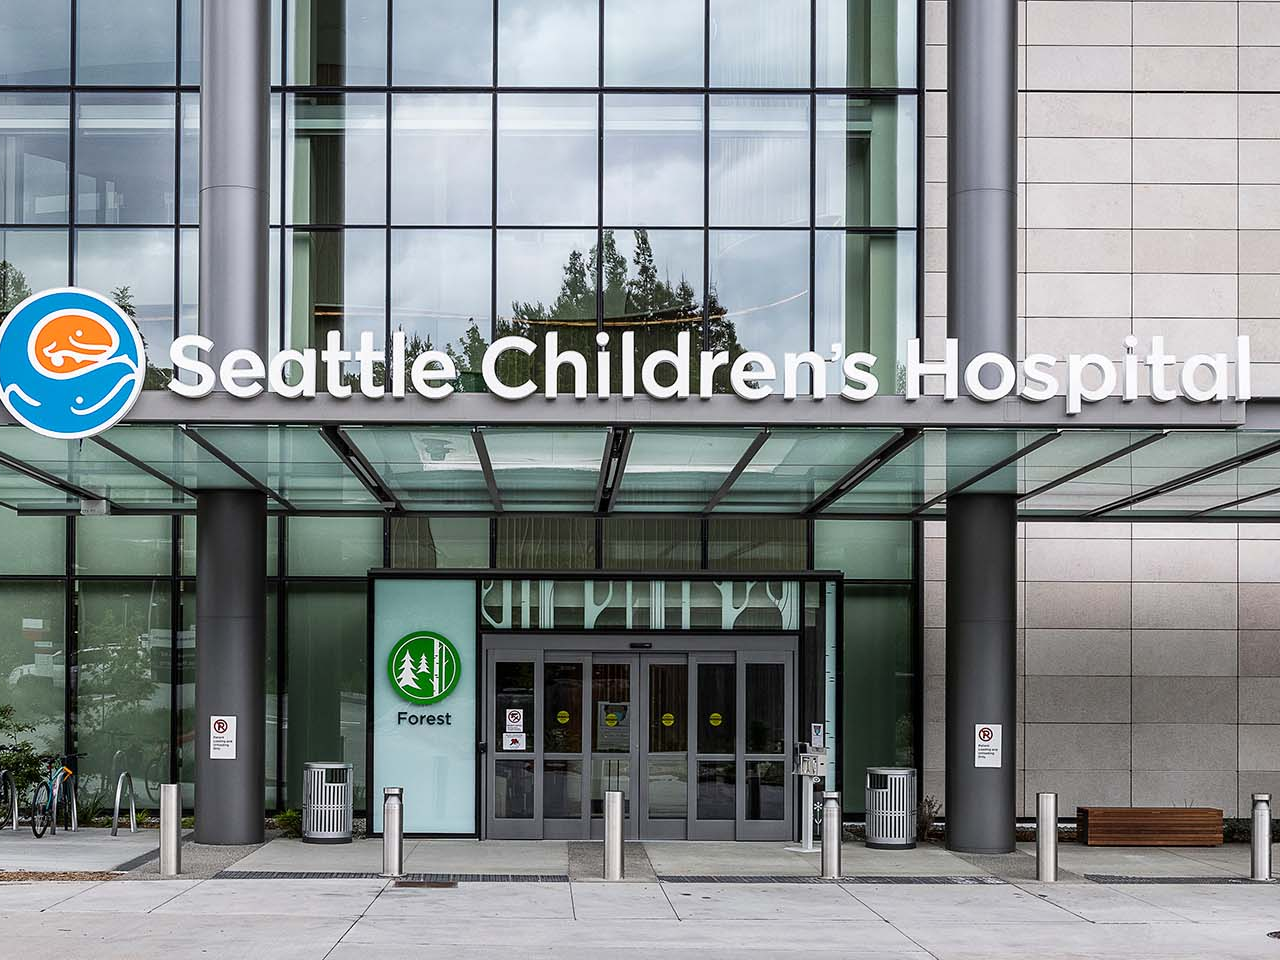 Seattle Childrens Hospital